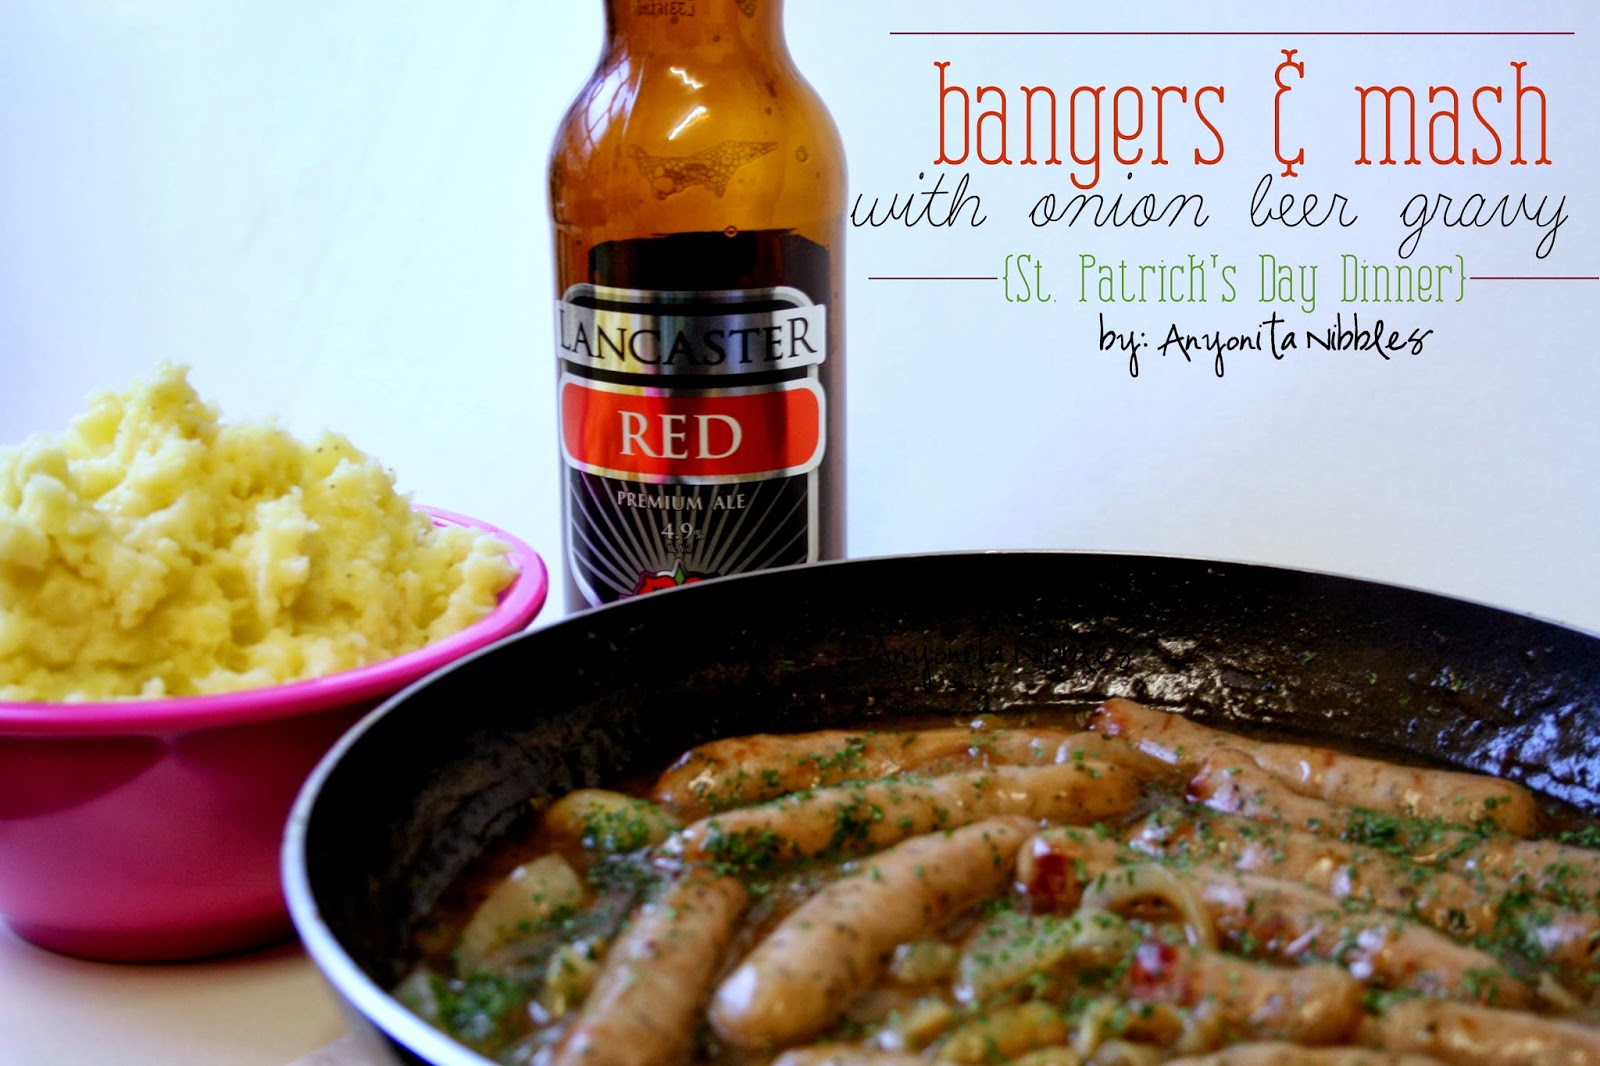 http://www.anyonita-nibbles.co.uk/2014/03/bangers-mash-onion-beer-gravy-st-patricks-day-dinner.html